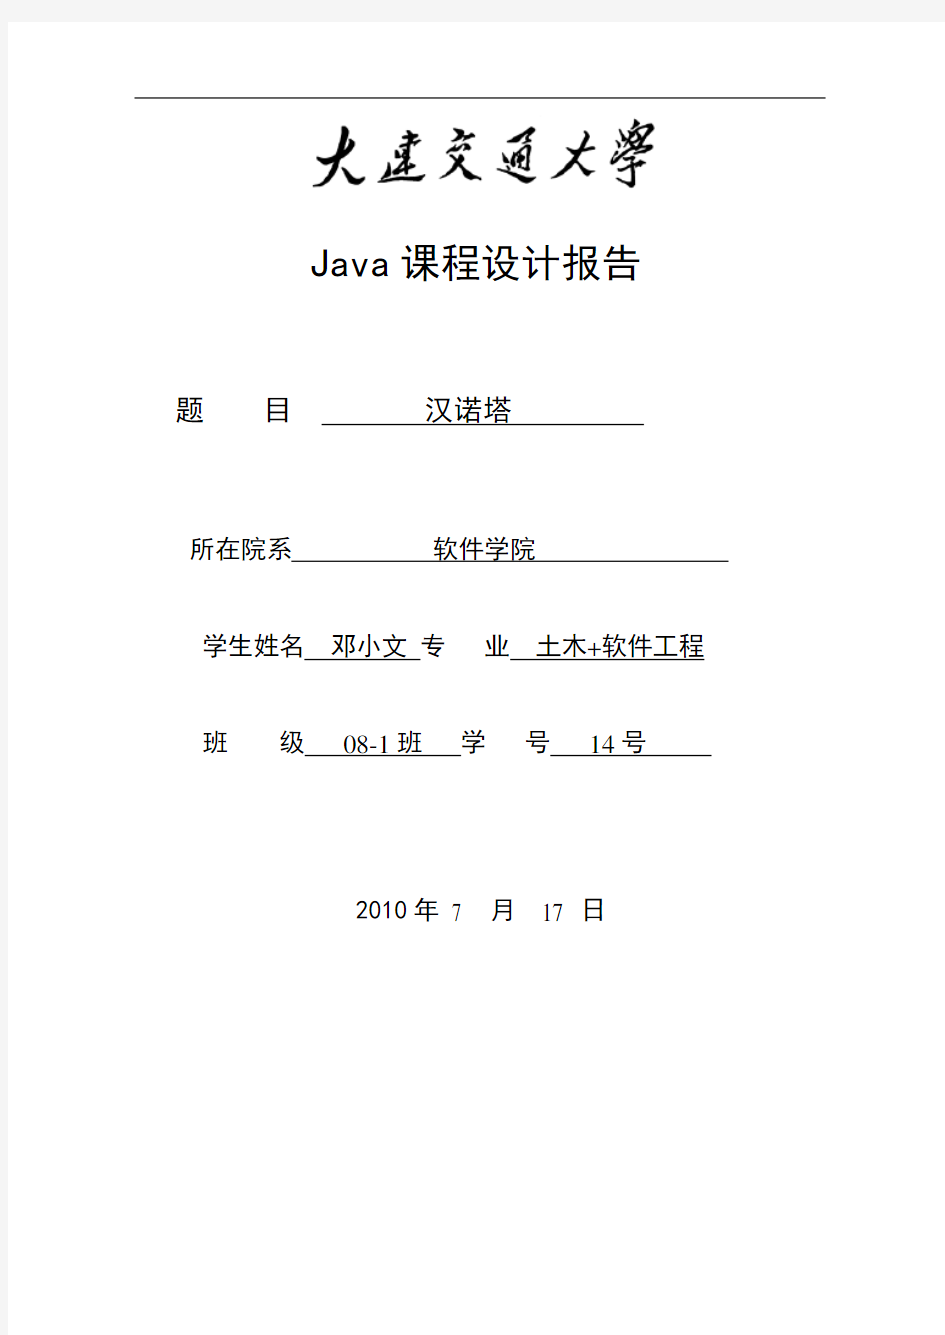 Hannoi塔汉诺塔Java课程设计报告